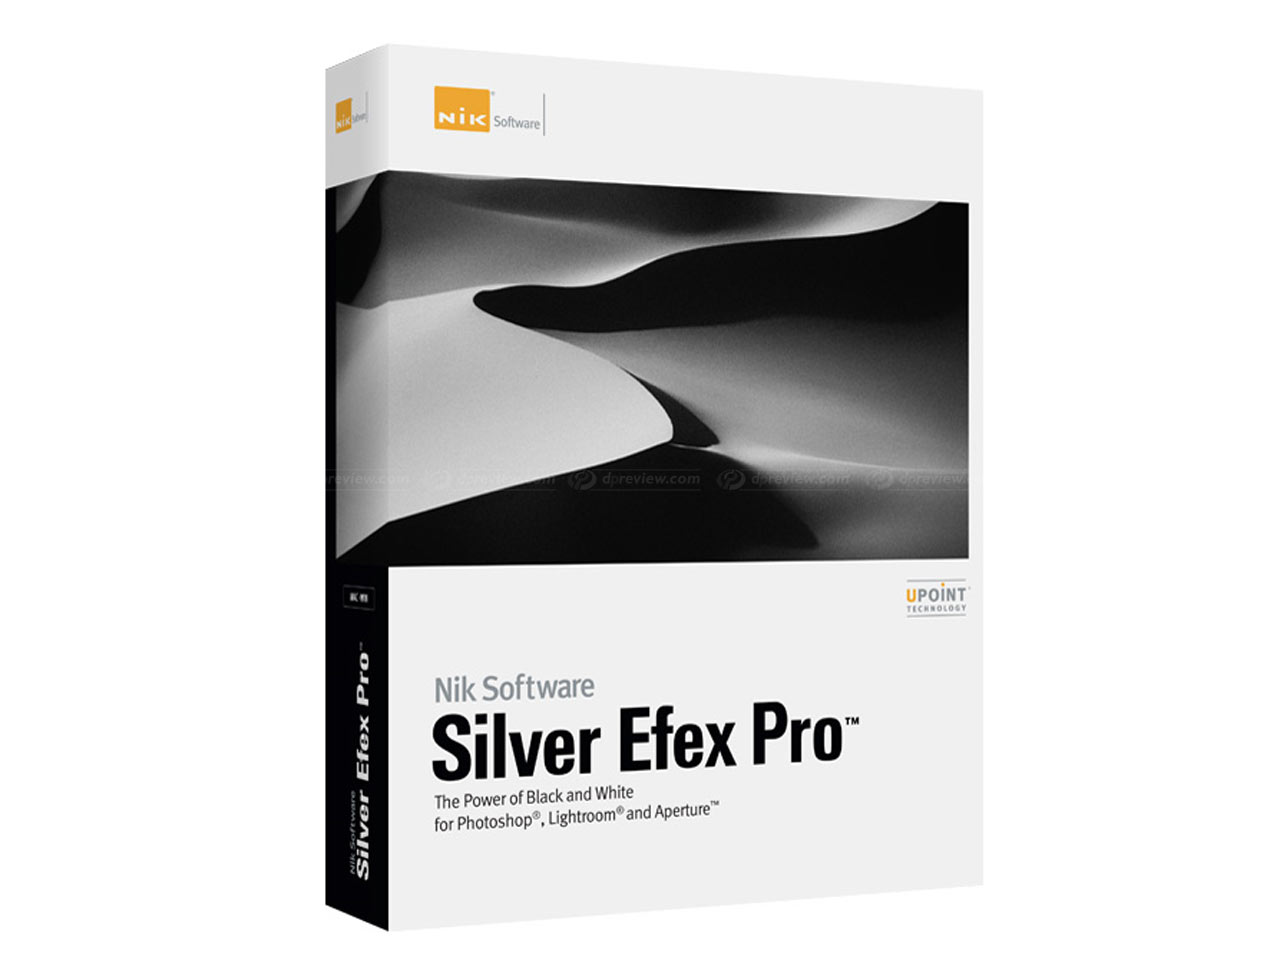 silver efex pro 2 free download full version